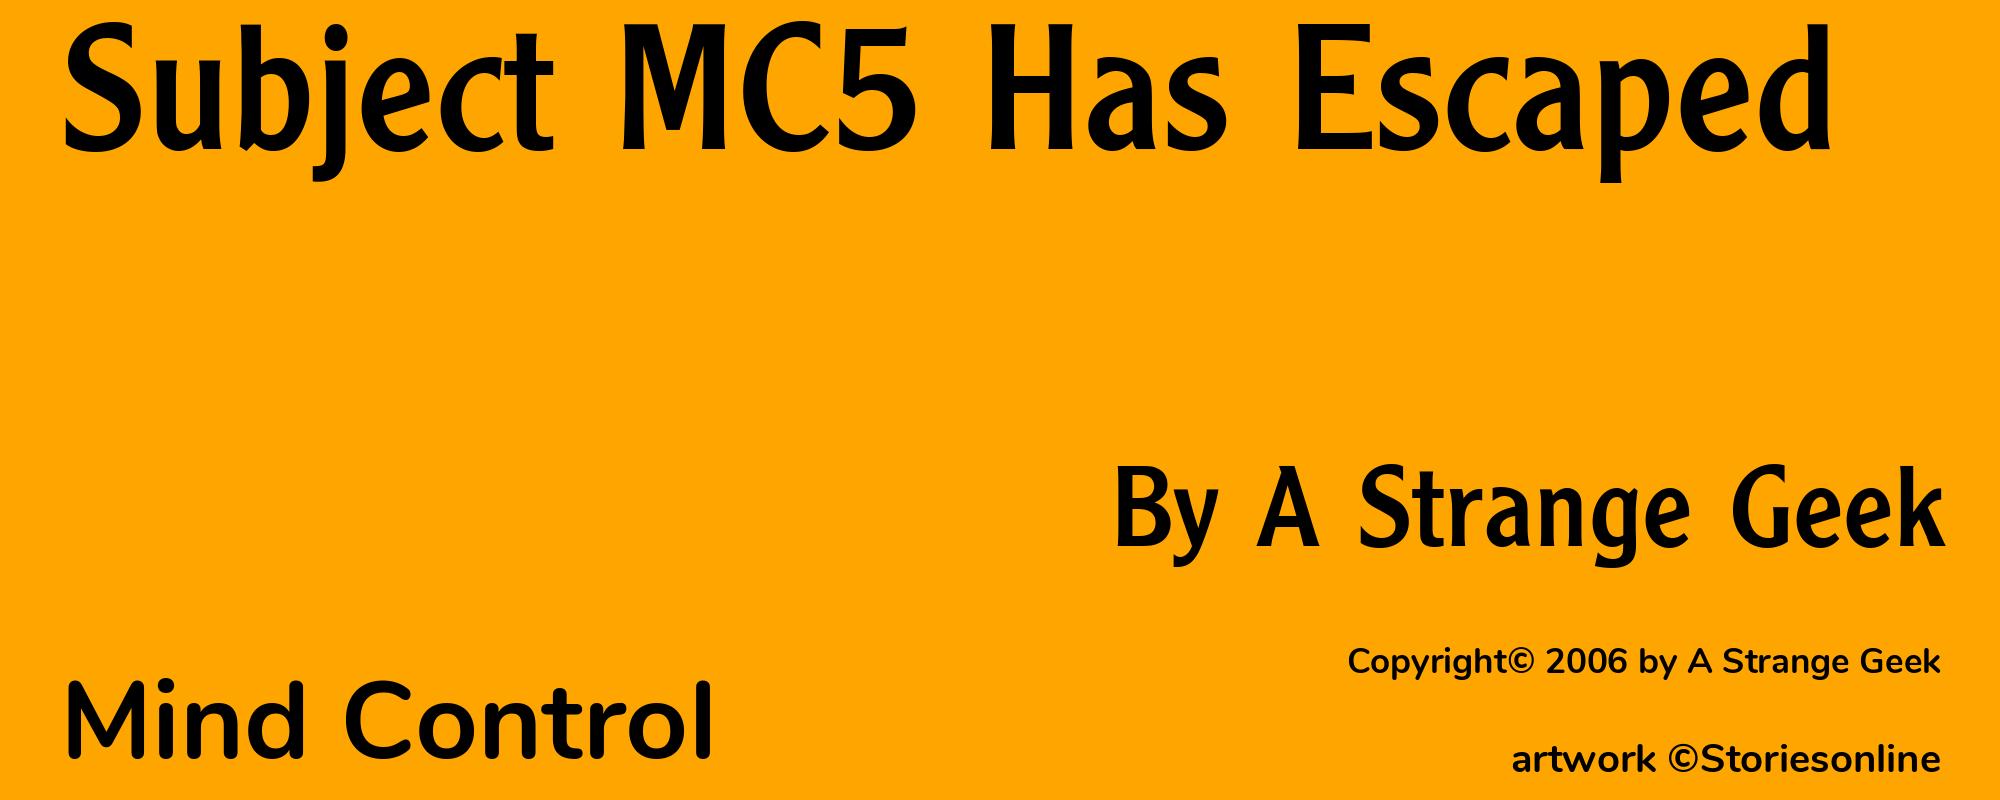 Subject MC5 Has Escaped - Cover